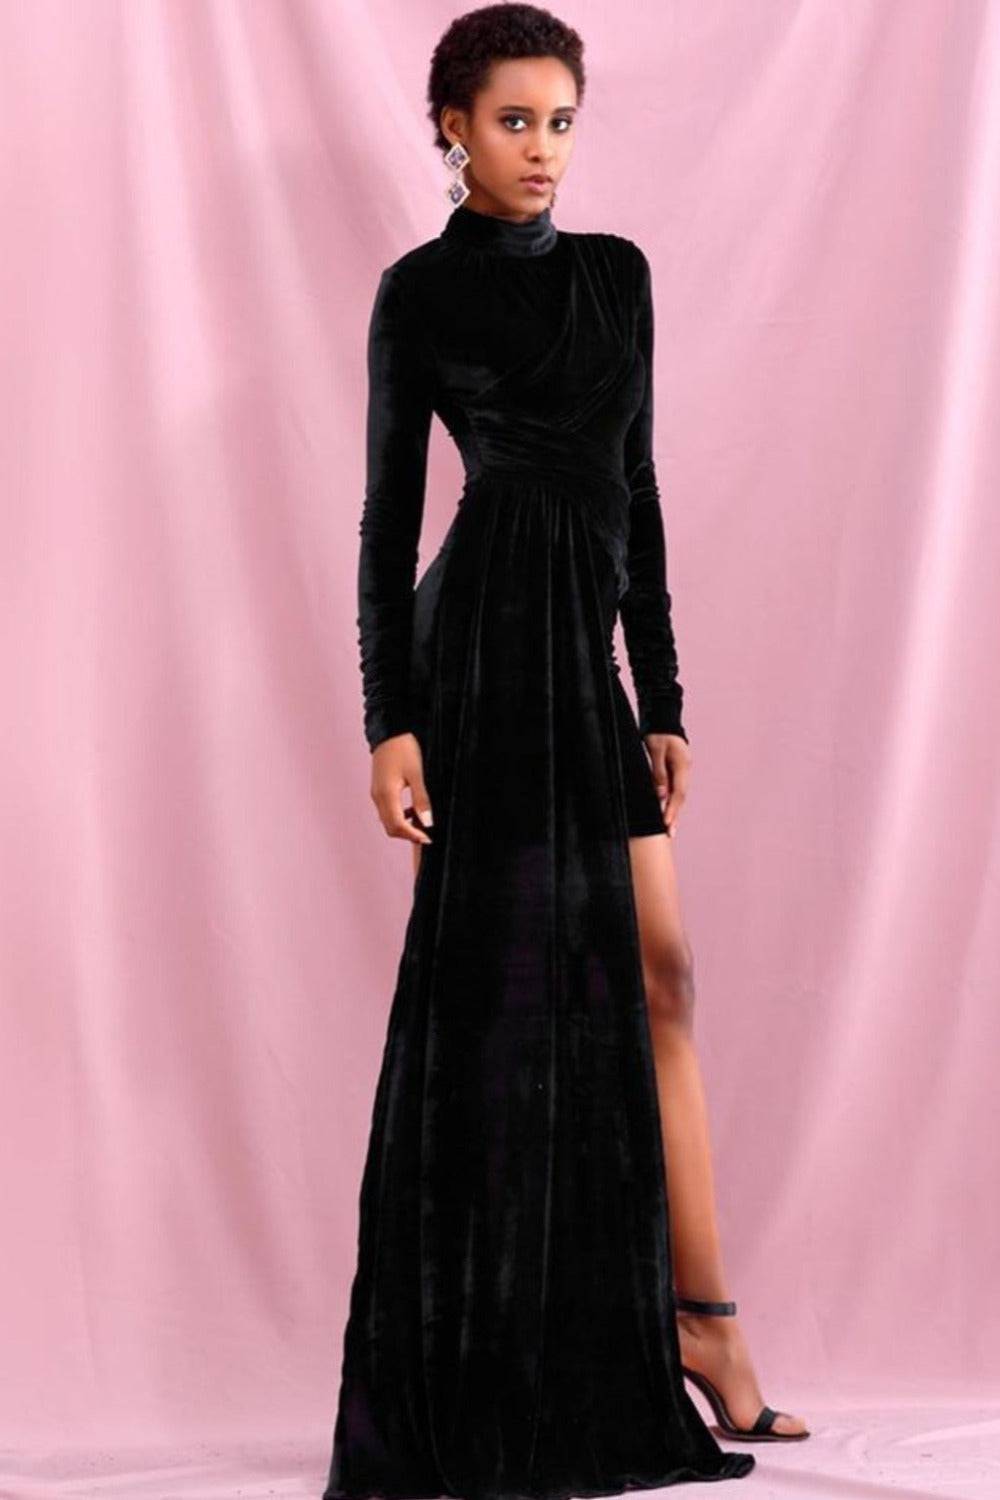 Black Velvet Bodycon Mini Dress With Train - TGC Boutique - Bodycon Dress